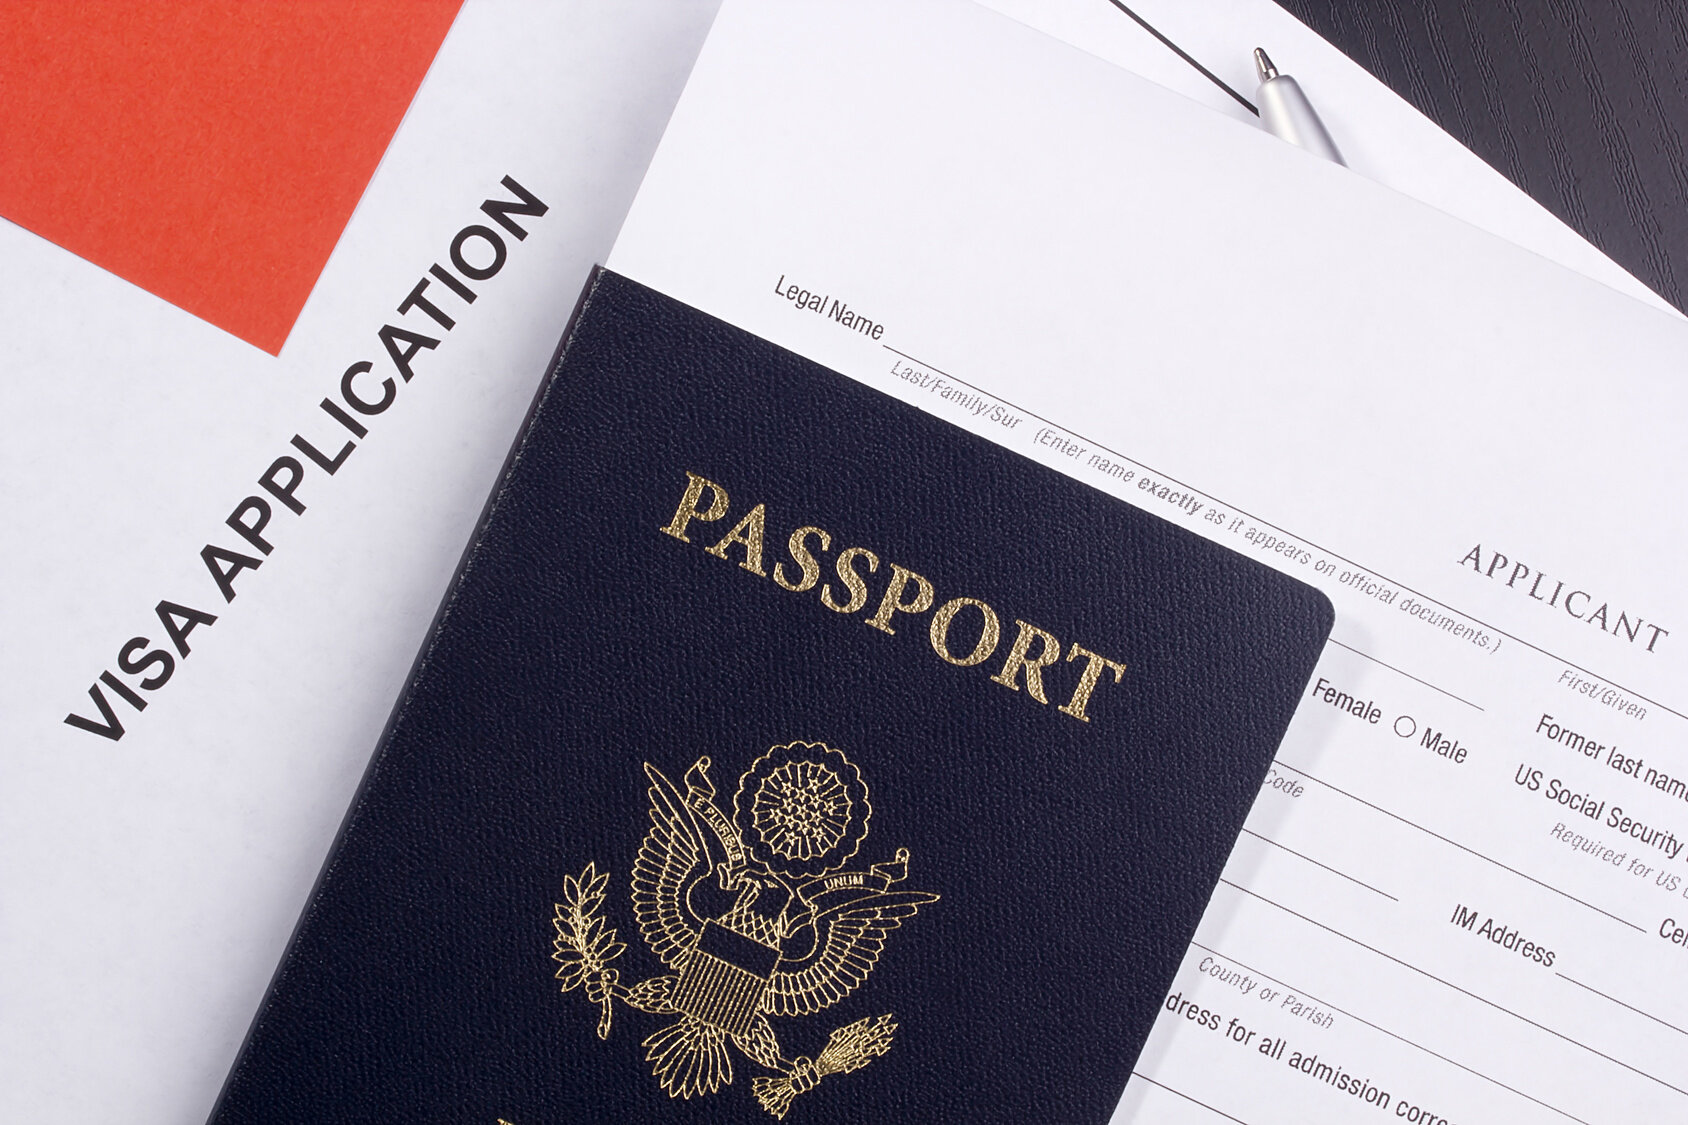 How to Attach Passport Photos in a Passport Application?